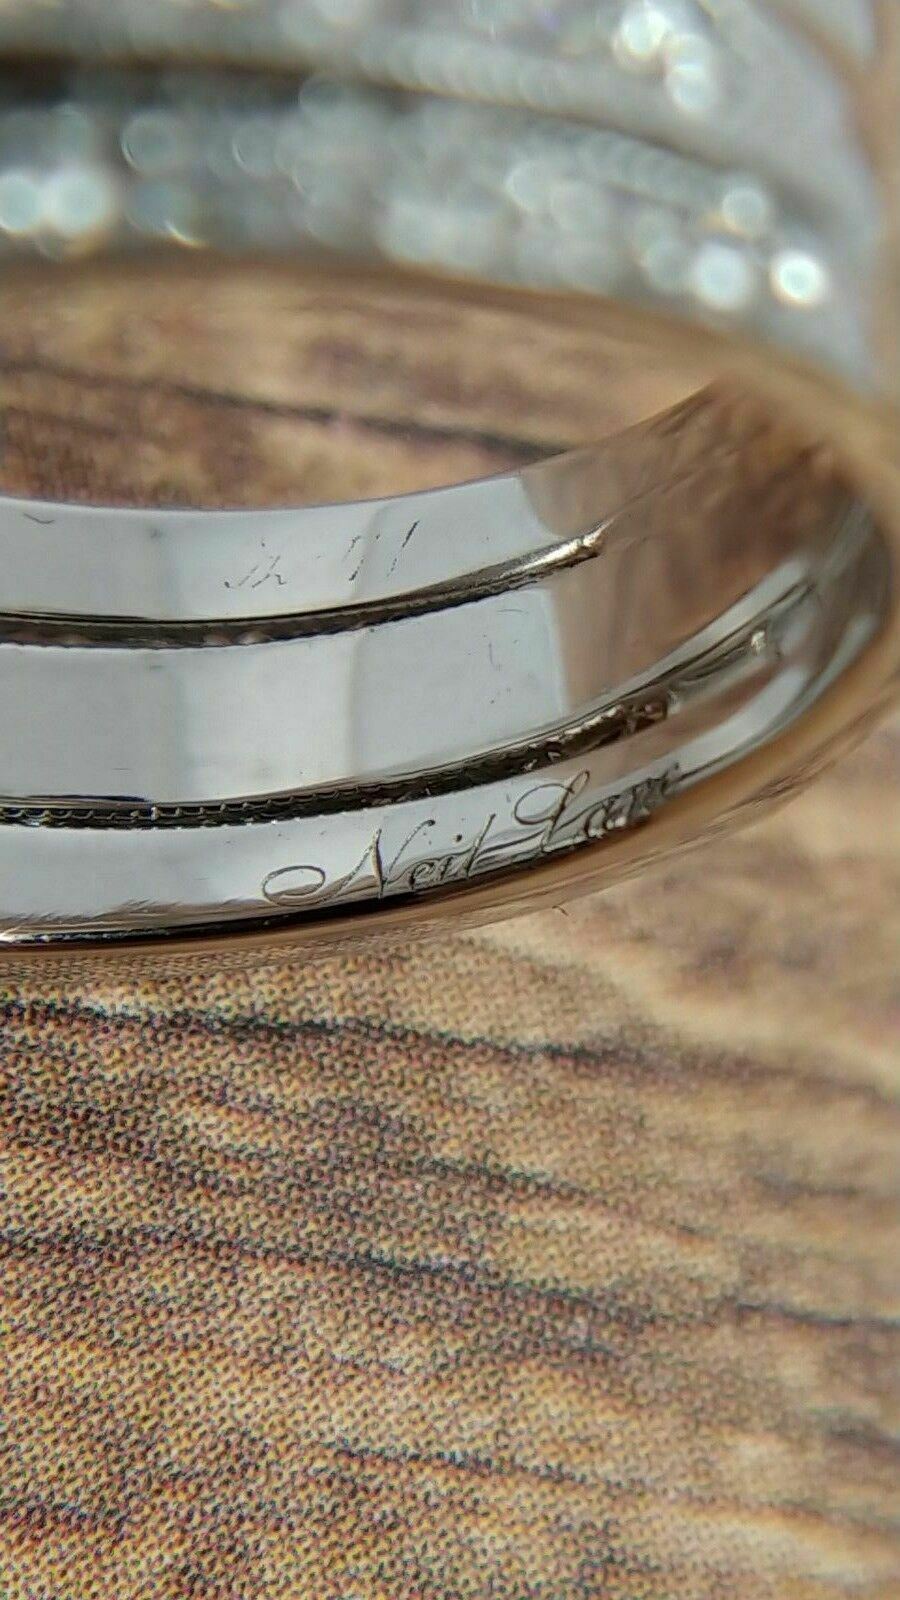 'Neil Lane' 3 Band Semi Mounting Diamond Ring with Accent Diamonds